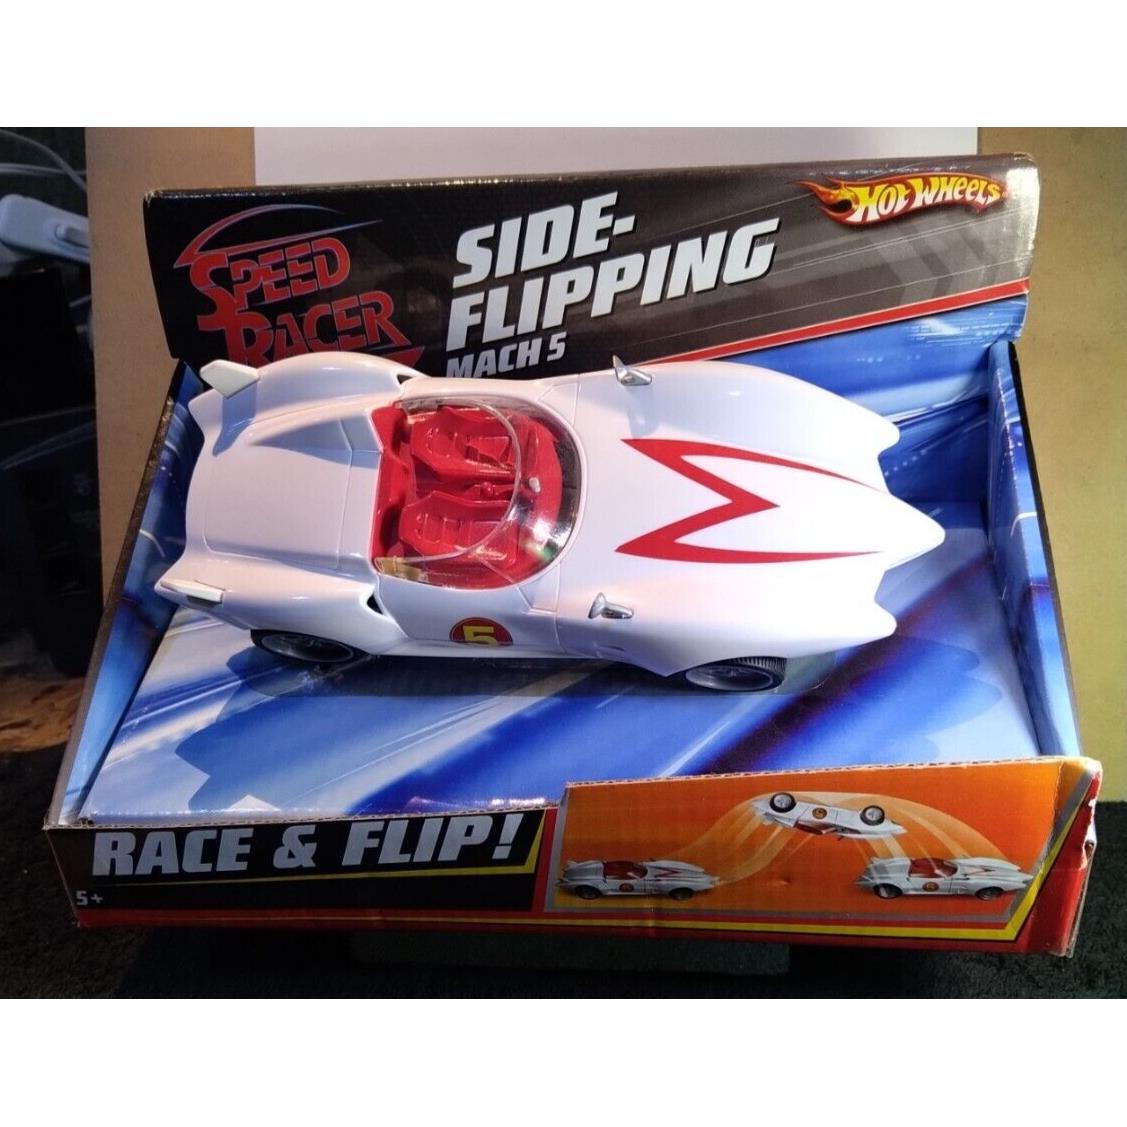 2007 Hot Wheels Speed Racer Side Flipping Mach 5 Race Flip Vhtf Rare